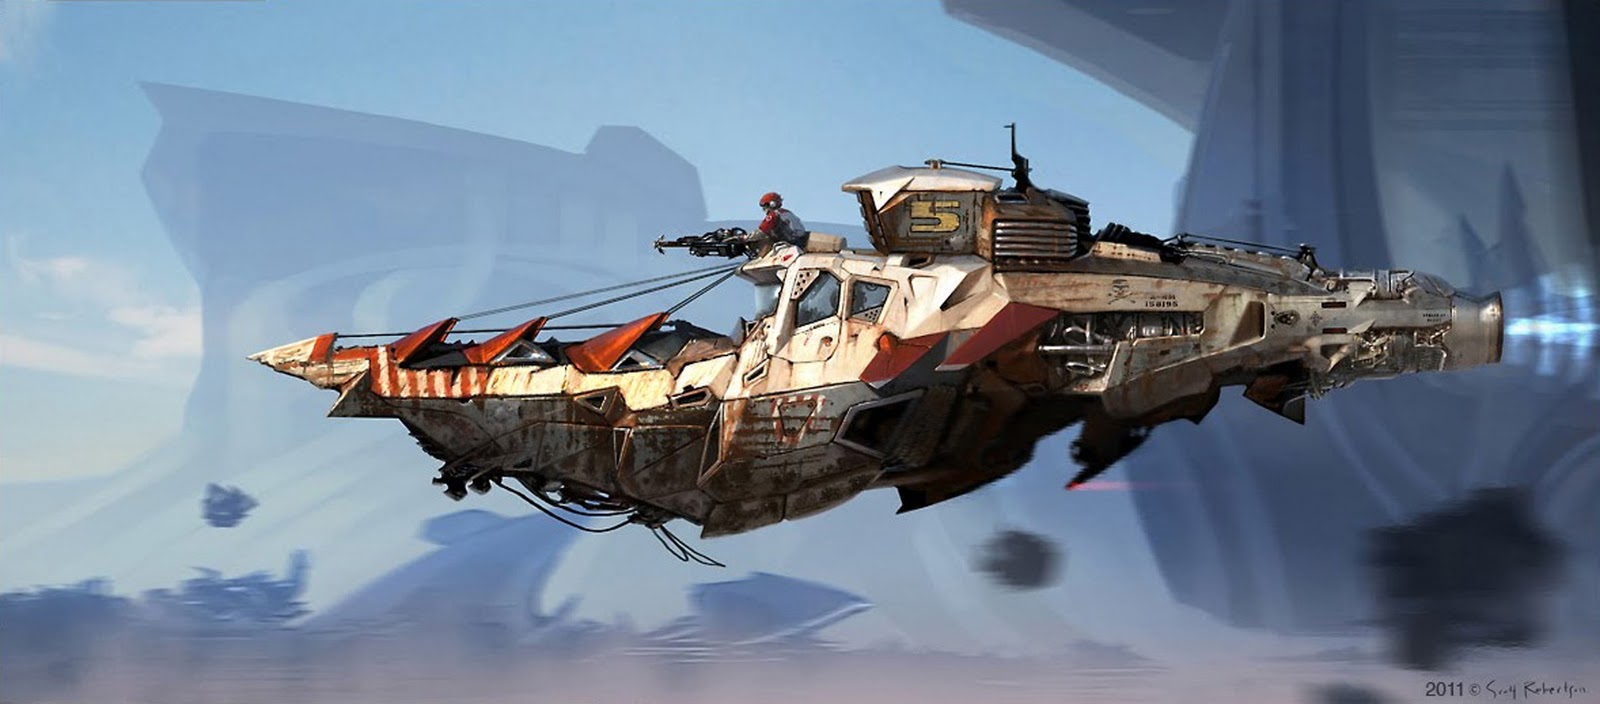 steampunk+concept+art+space+ship+cruiser+hyper+jet+scott+robertson+blast+2.jpg" style="width: 500px;height: 200px